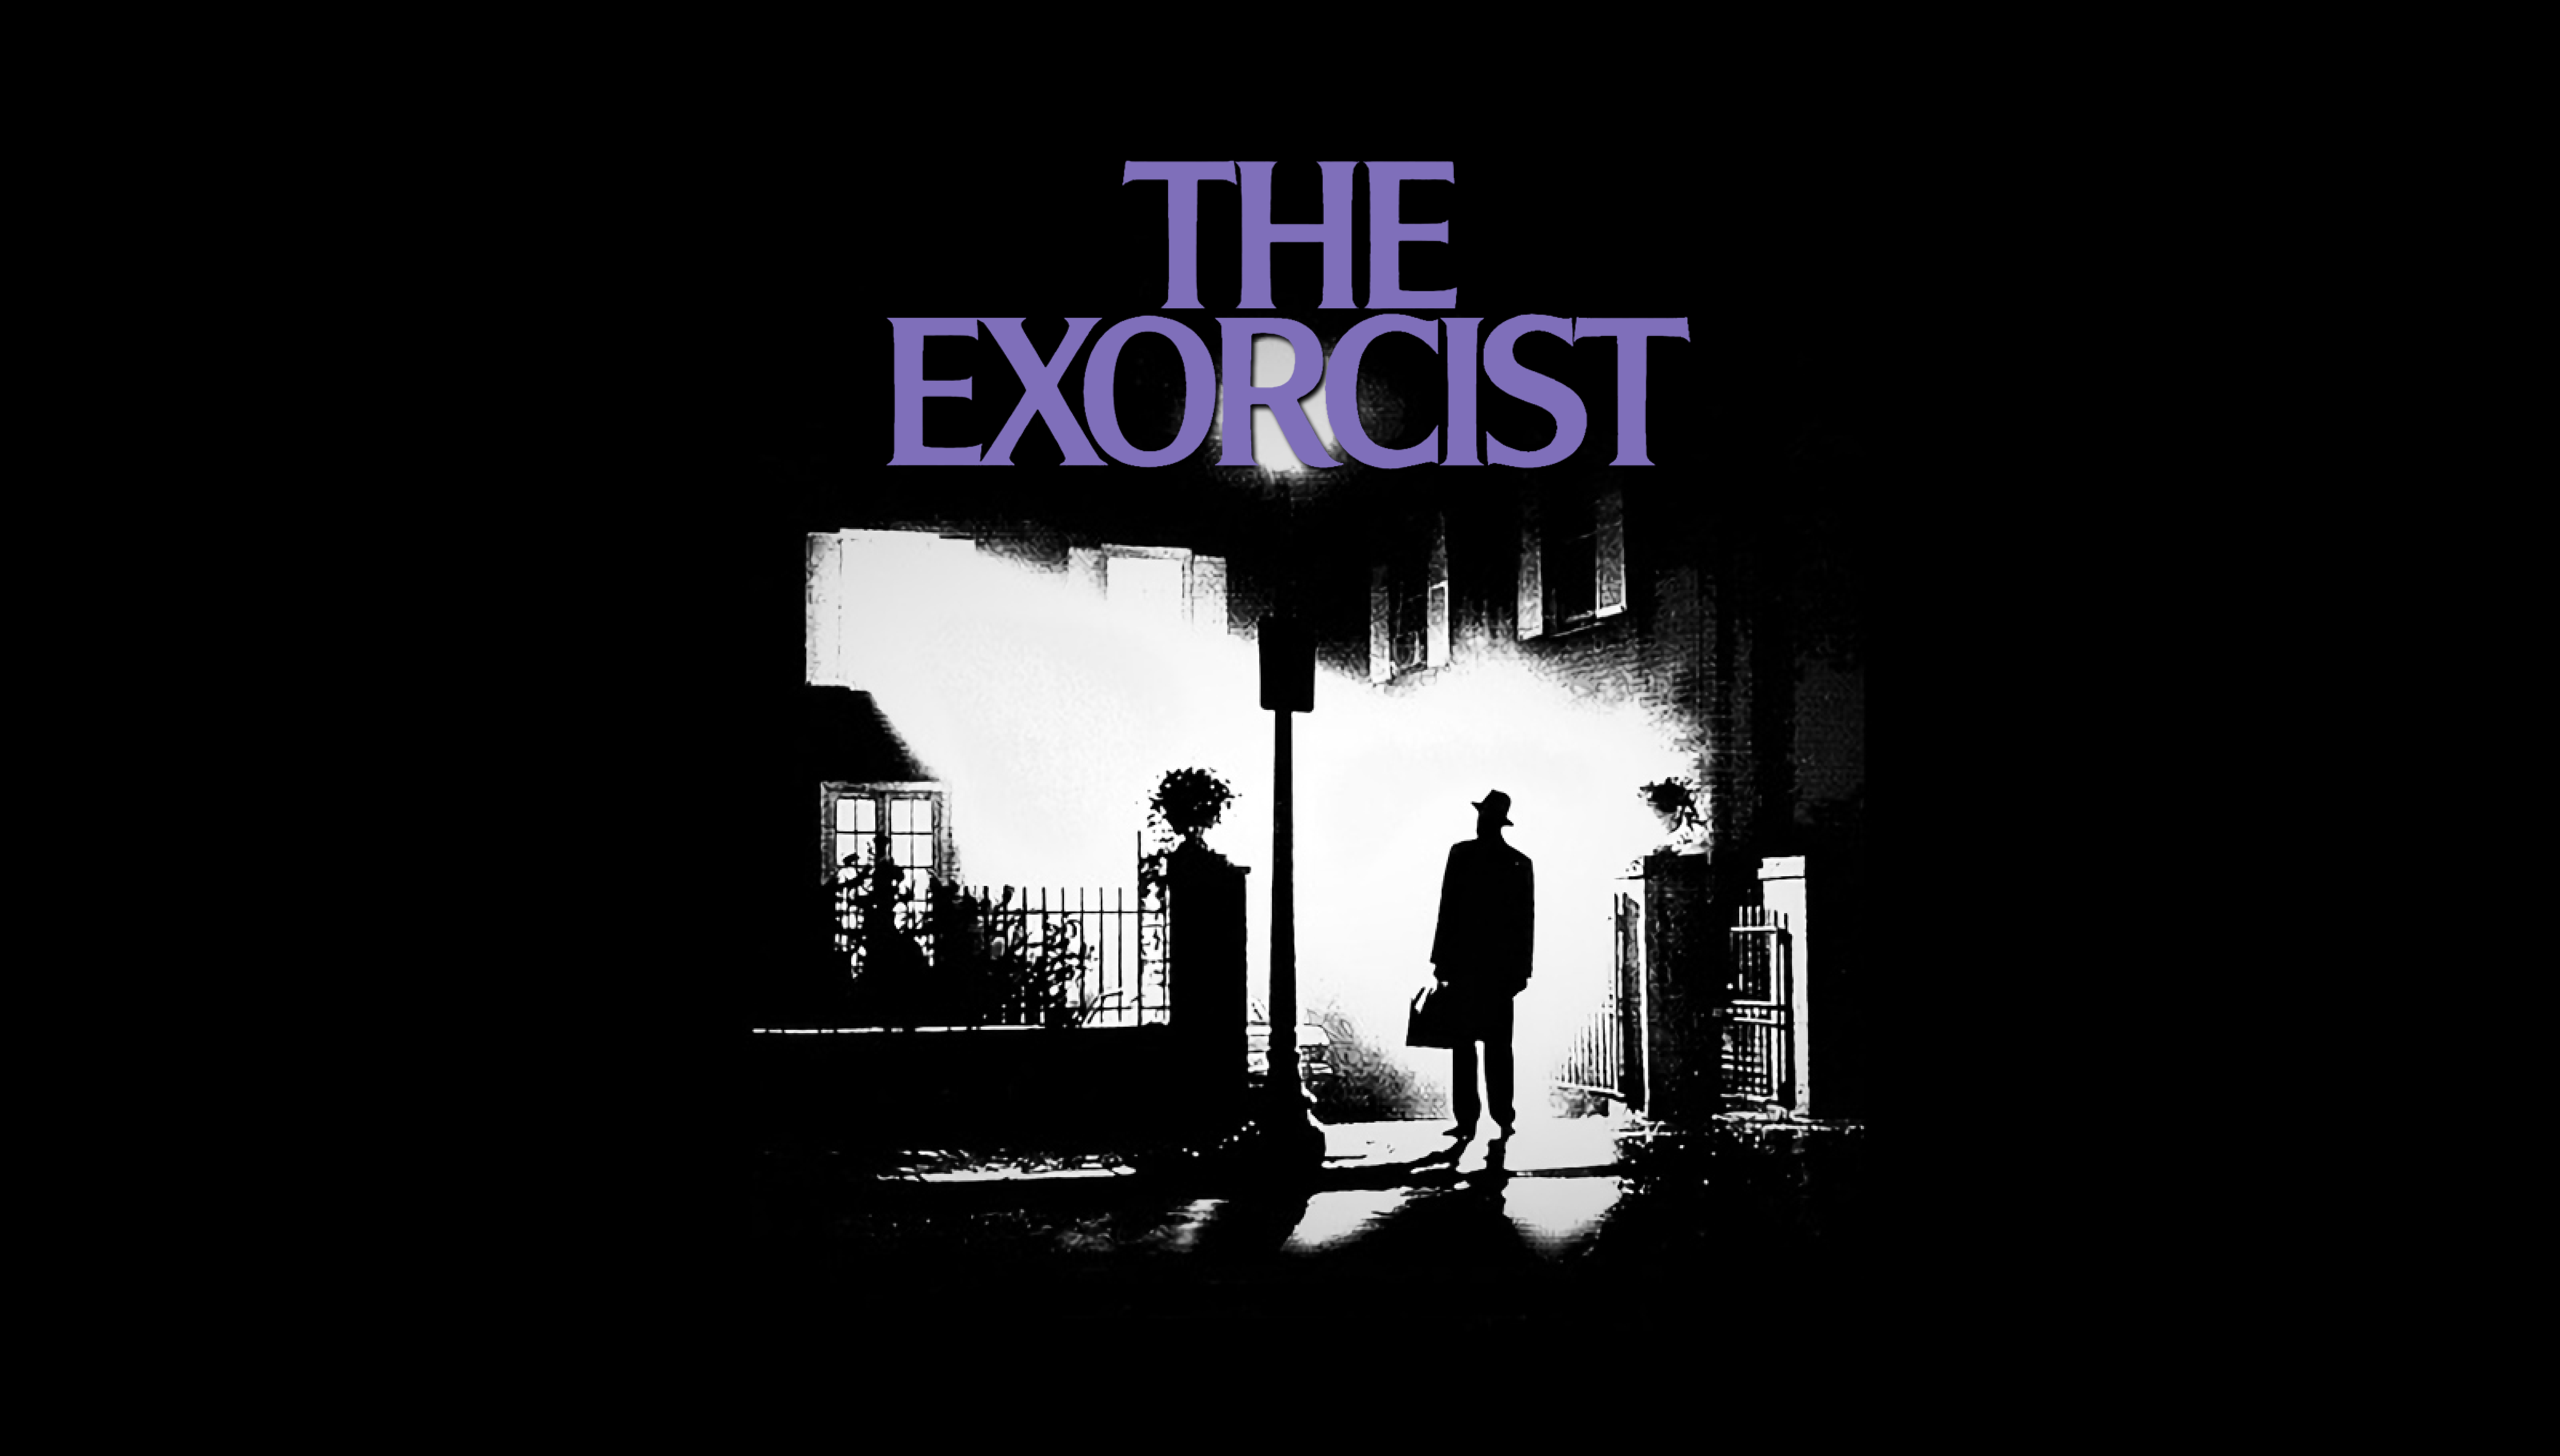 The Exorcist 1973 Wallpaper By Stephen Fisher On Deviantart